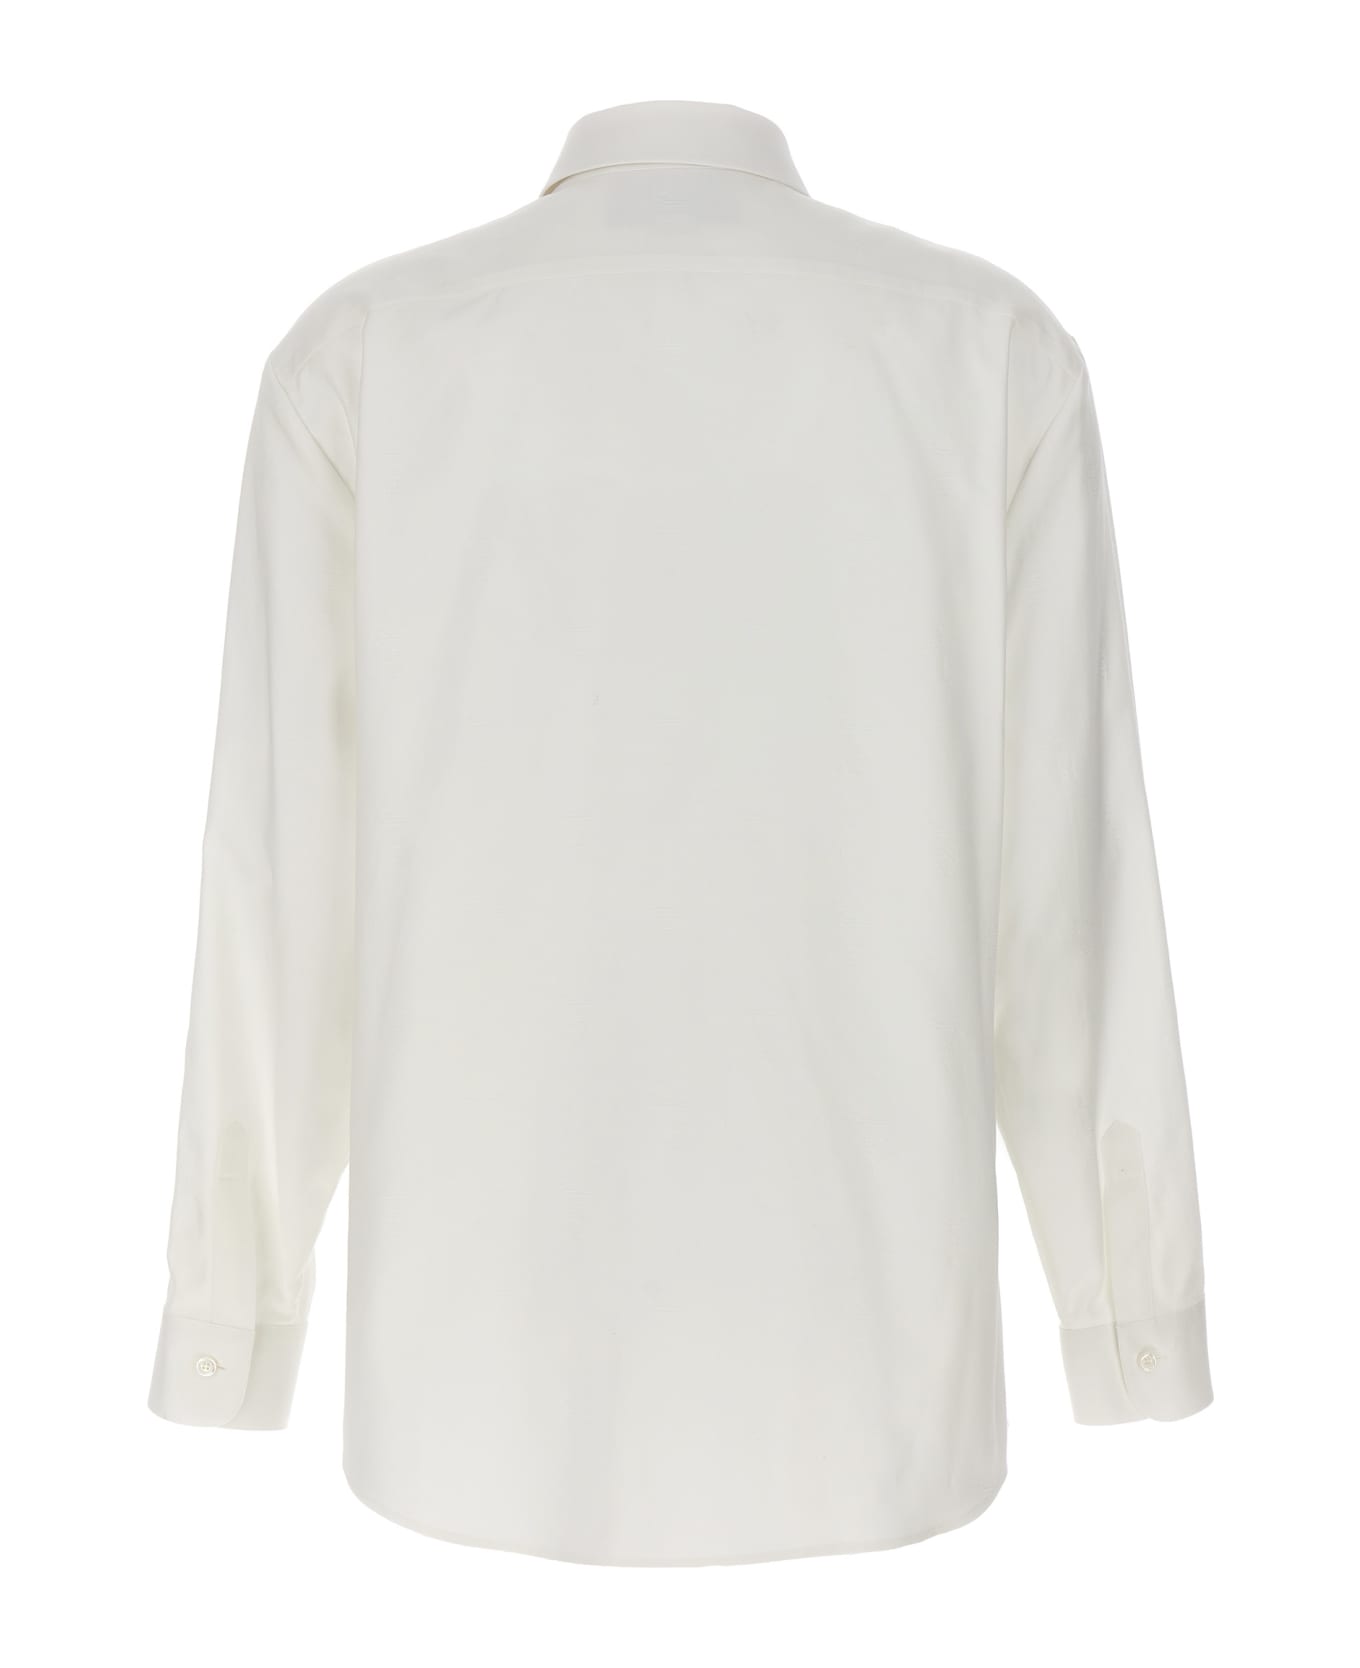 Gucci Oxford Shirt - White